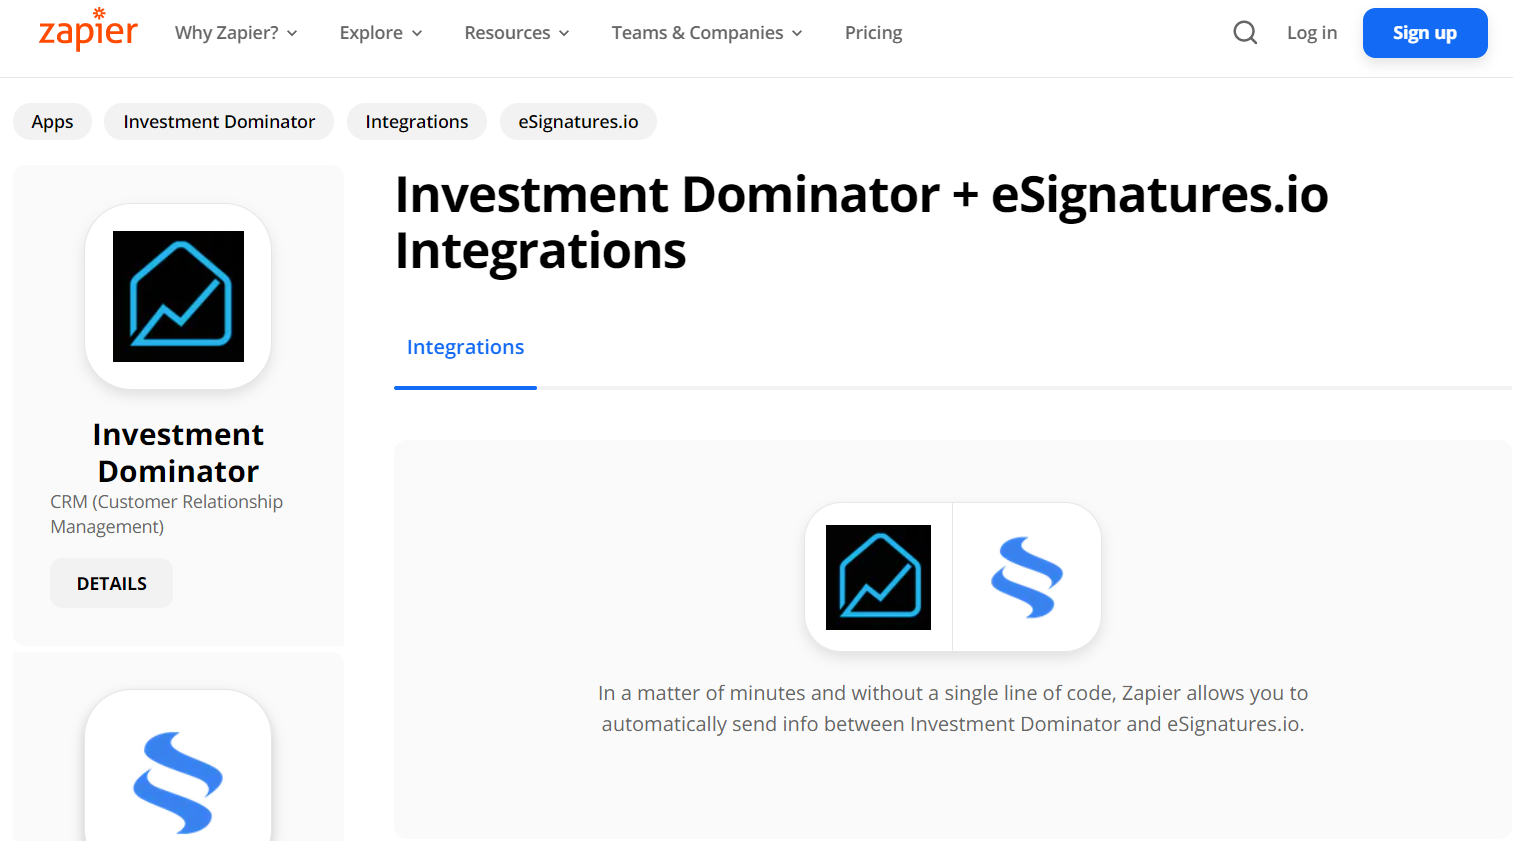 Zapier: How To Connect The Investment Dominator To eSignatures.io